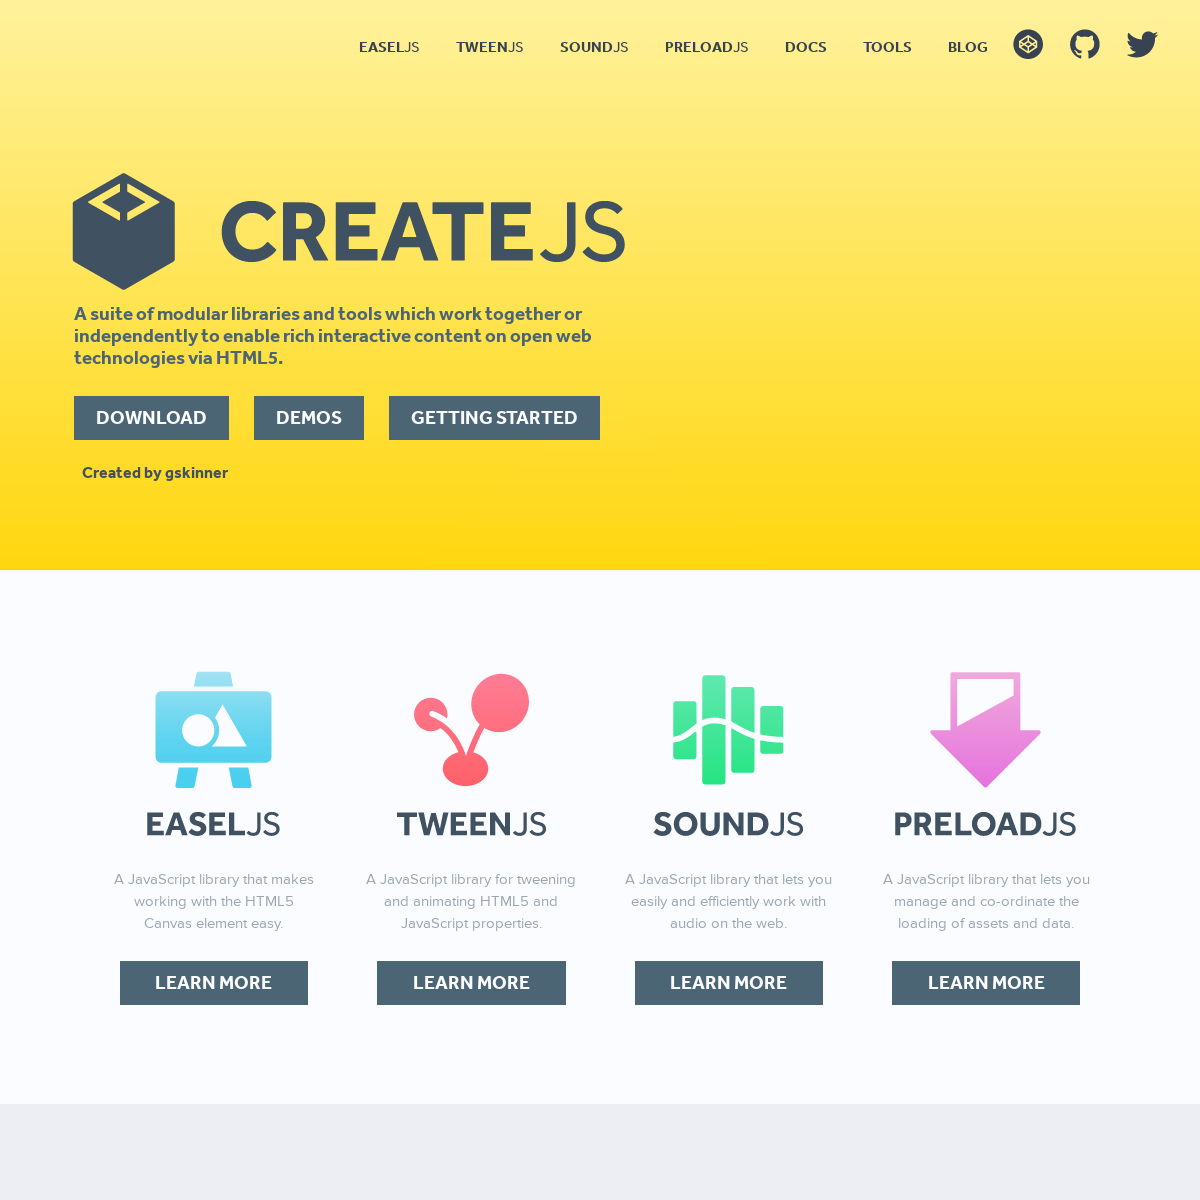 A complete backup of createjs.com